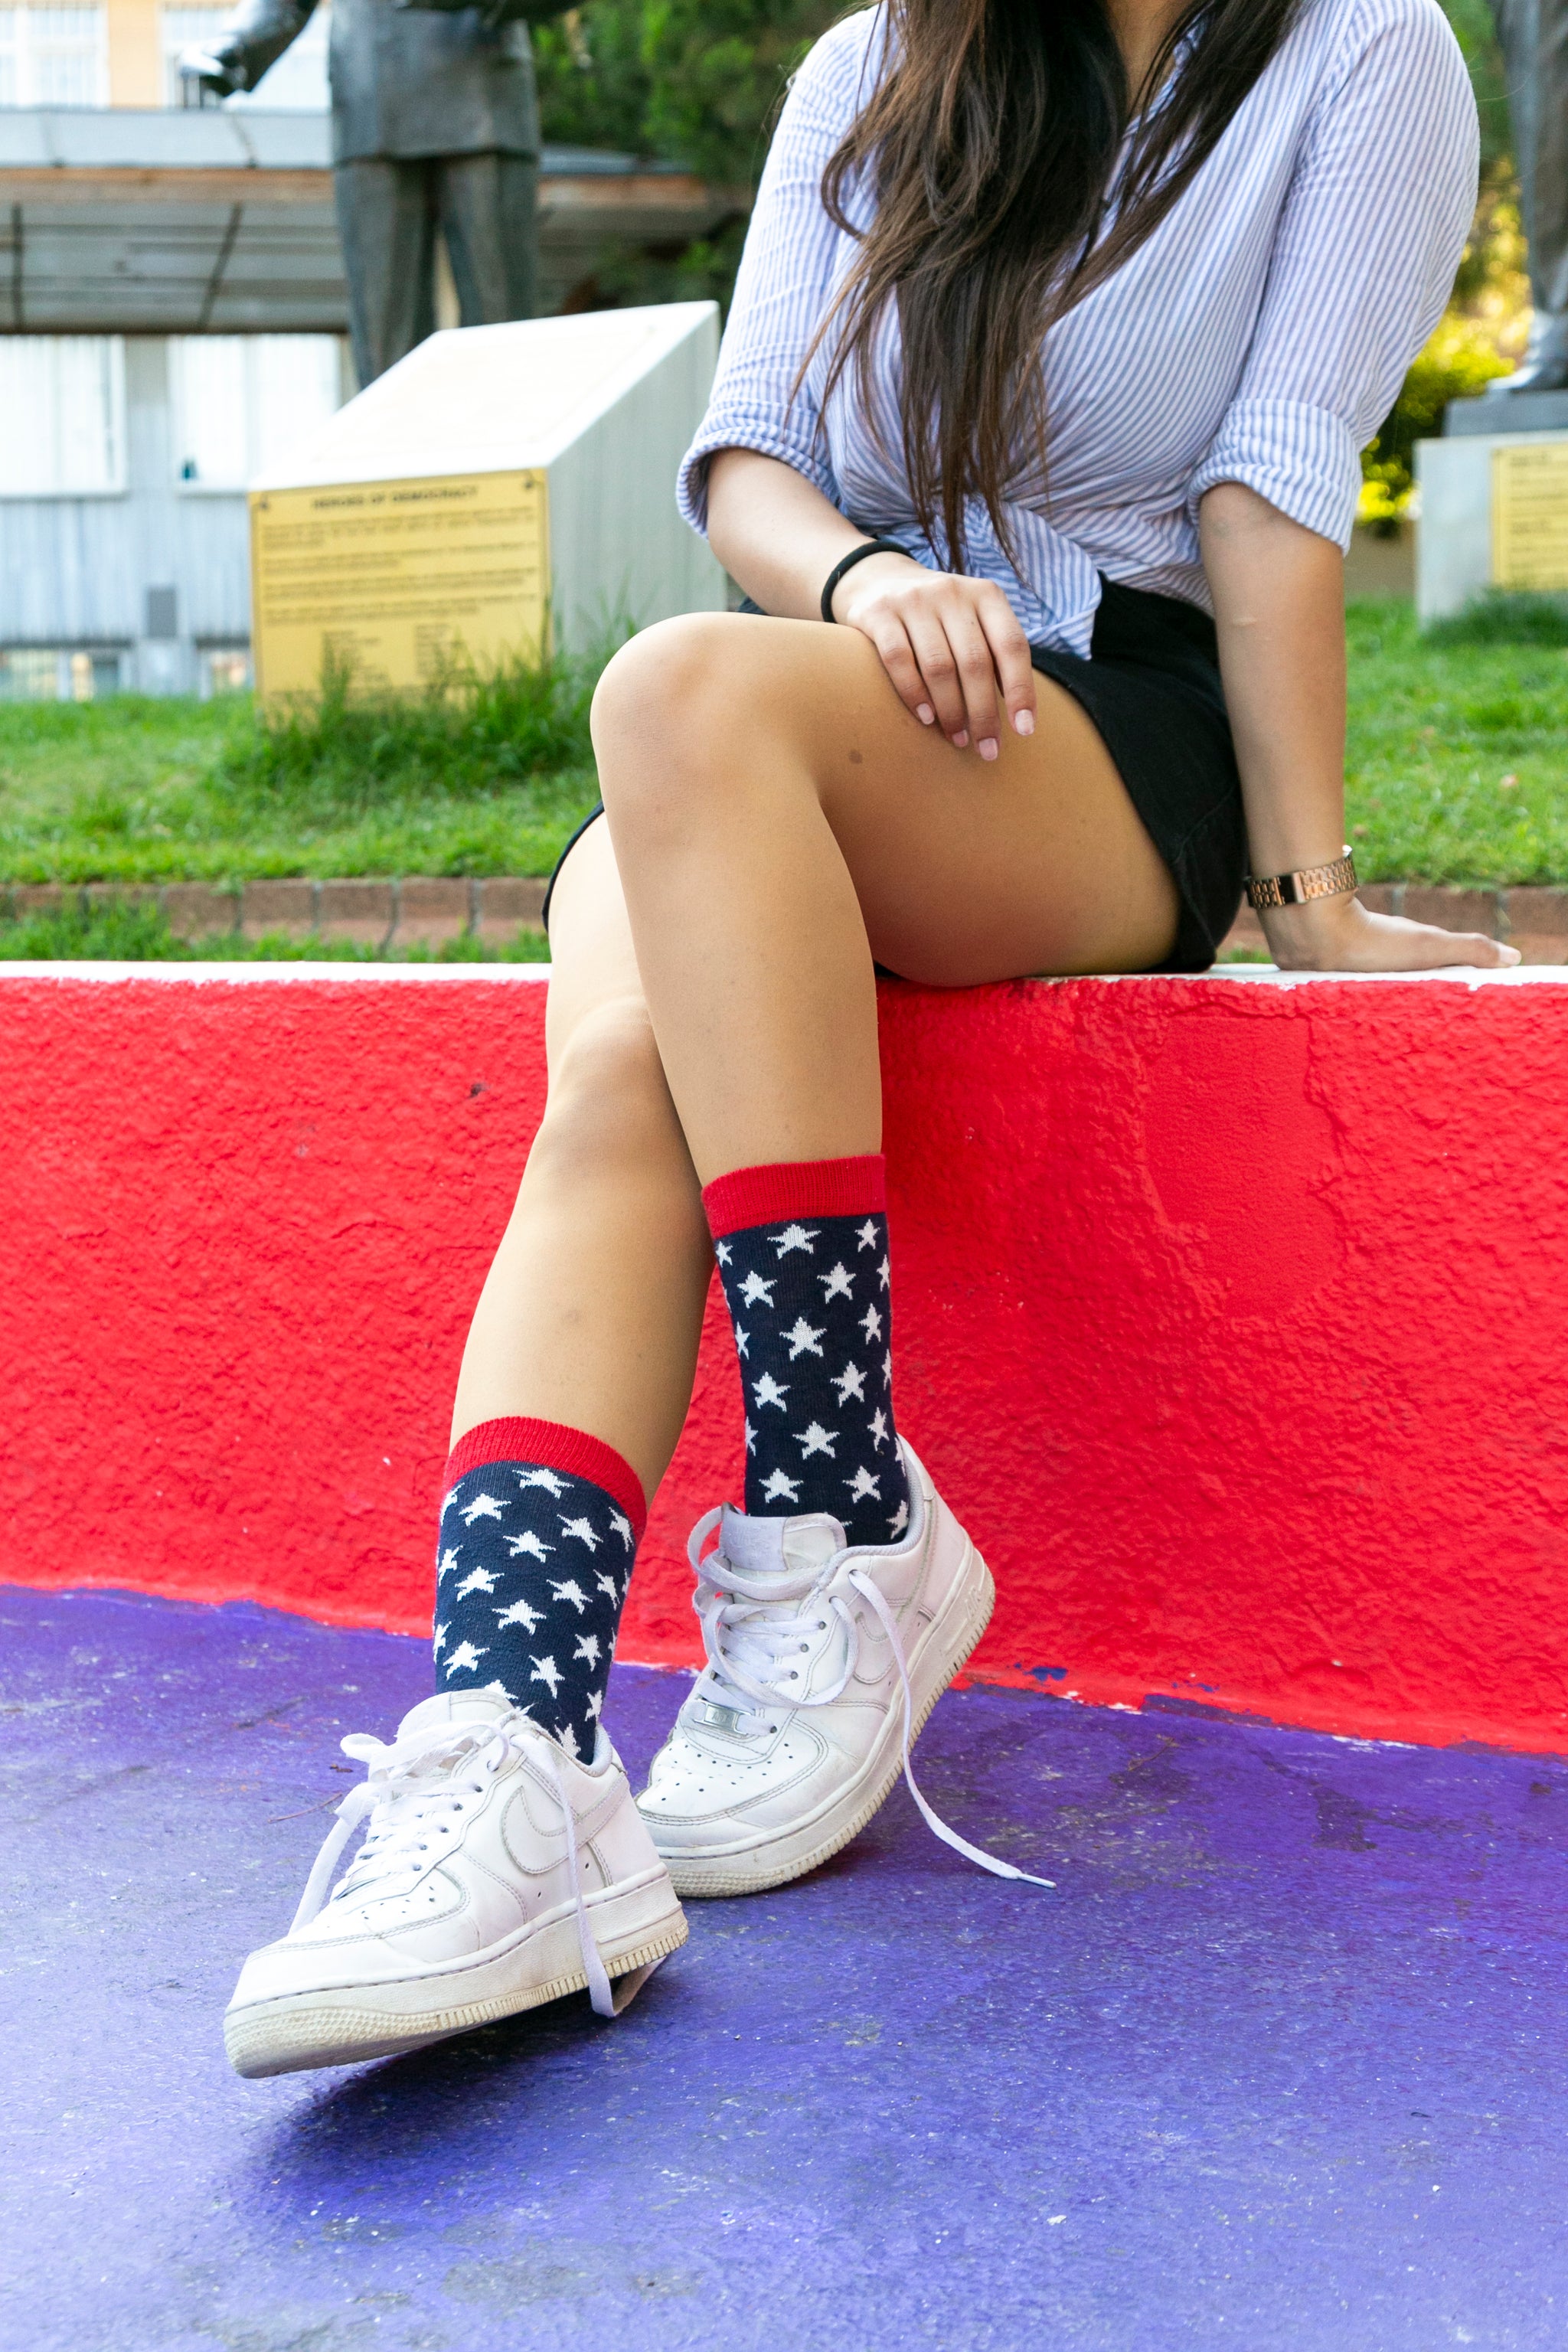 Women's Usa Patriotic Stars Socks